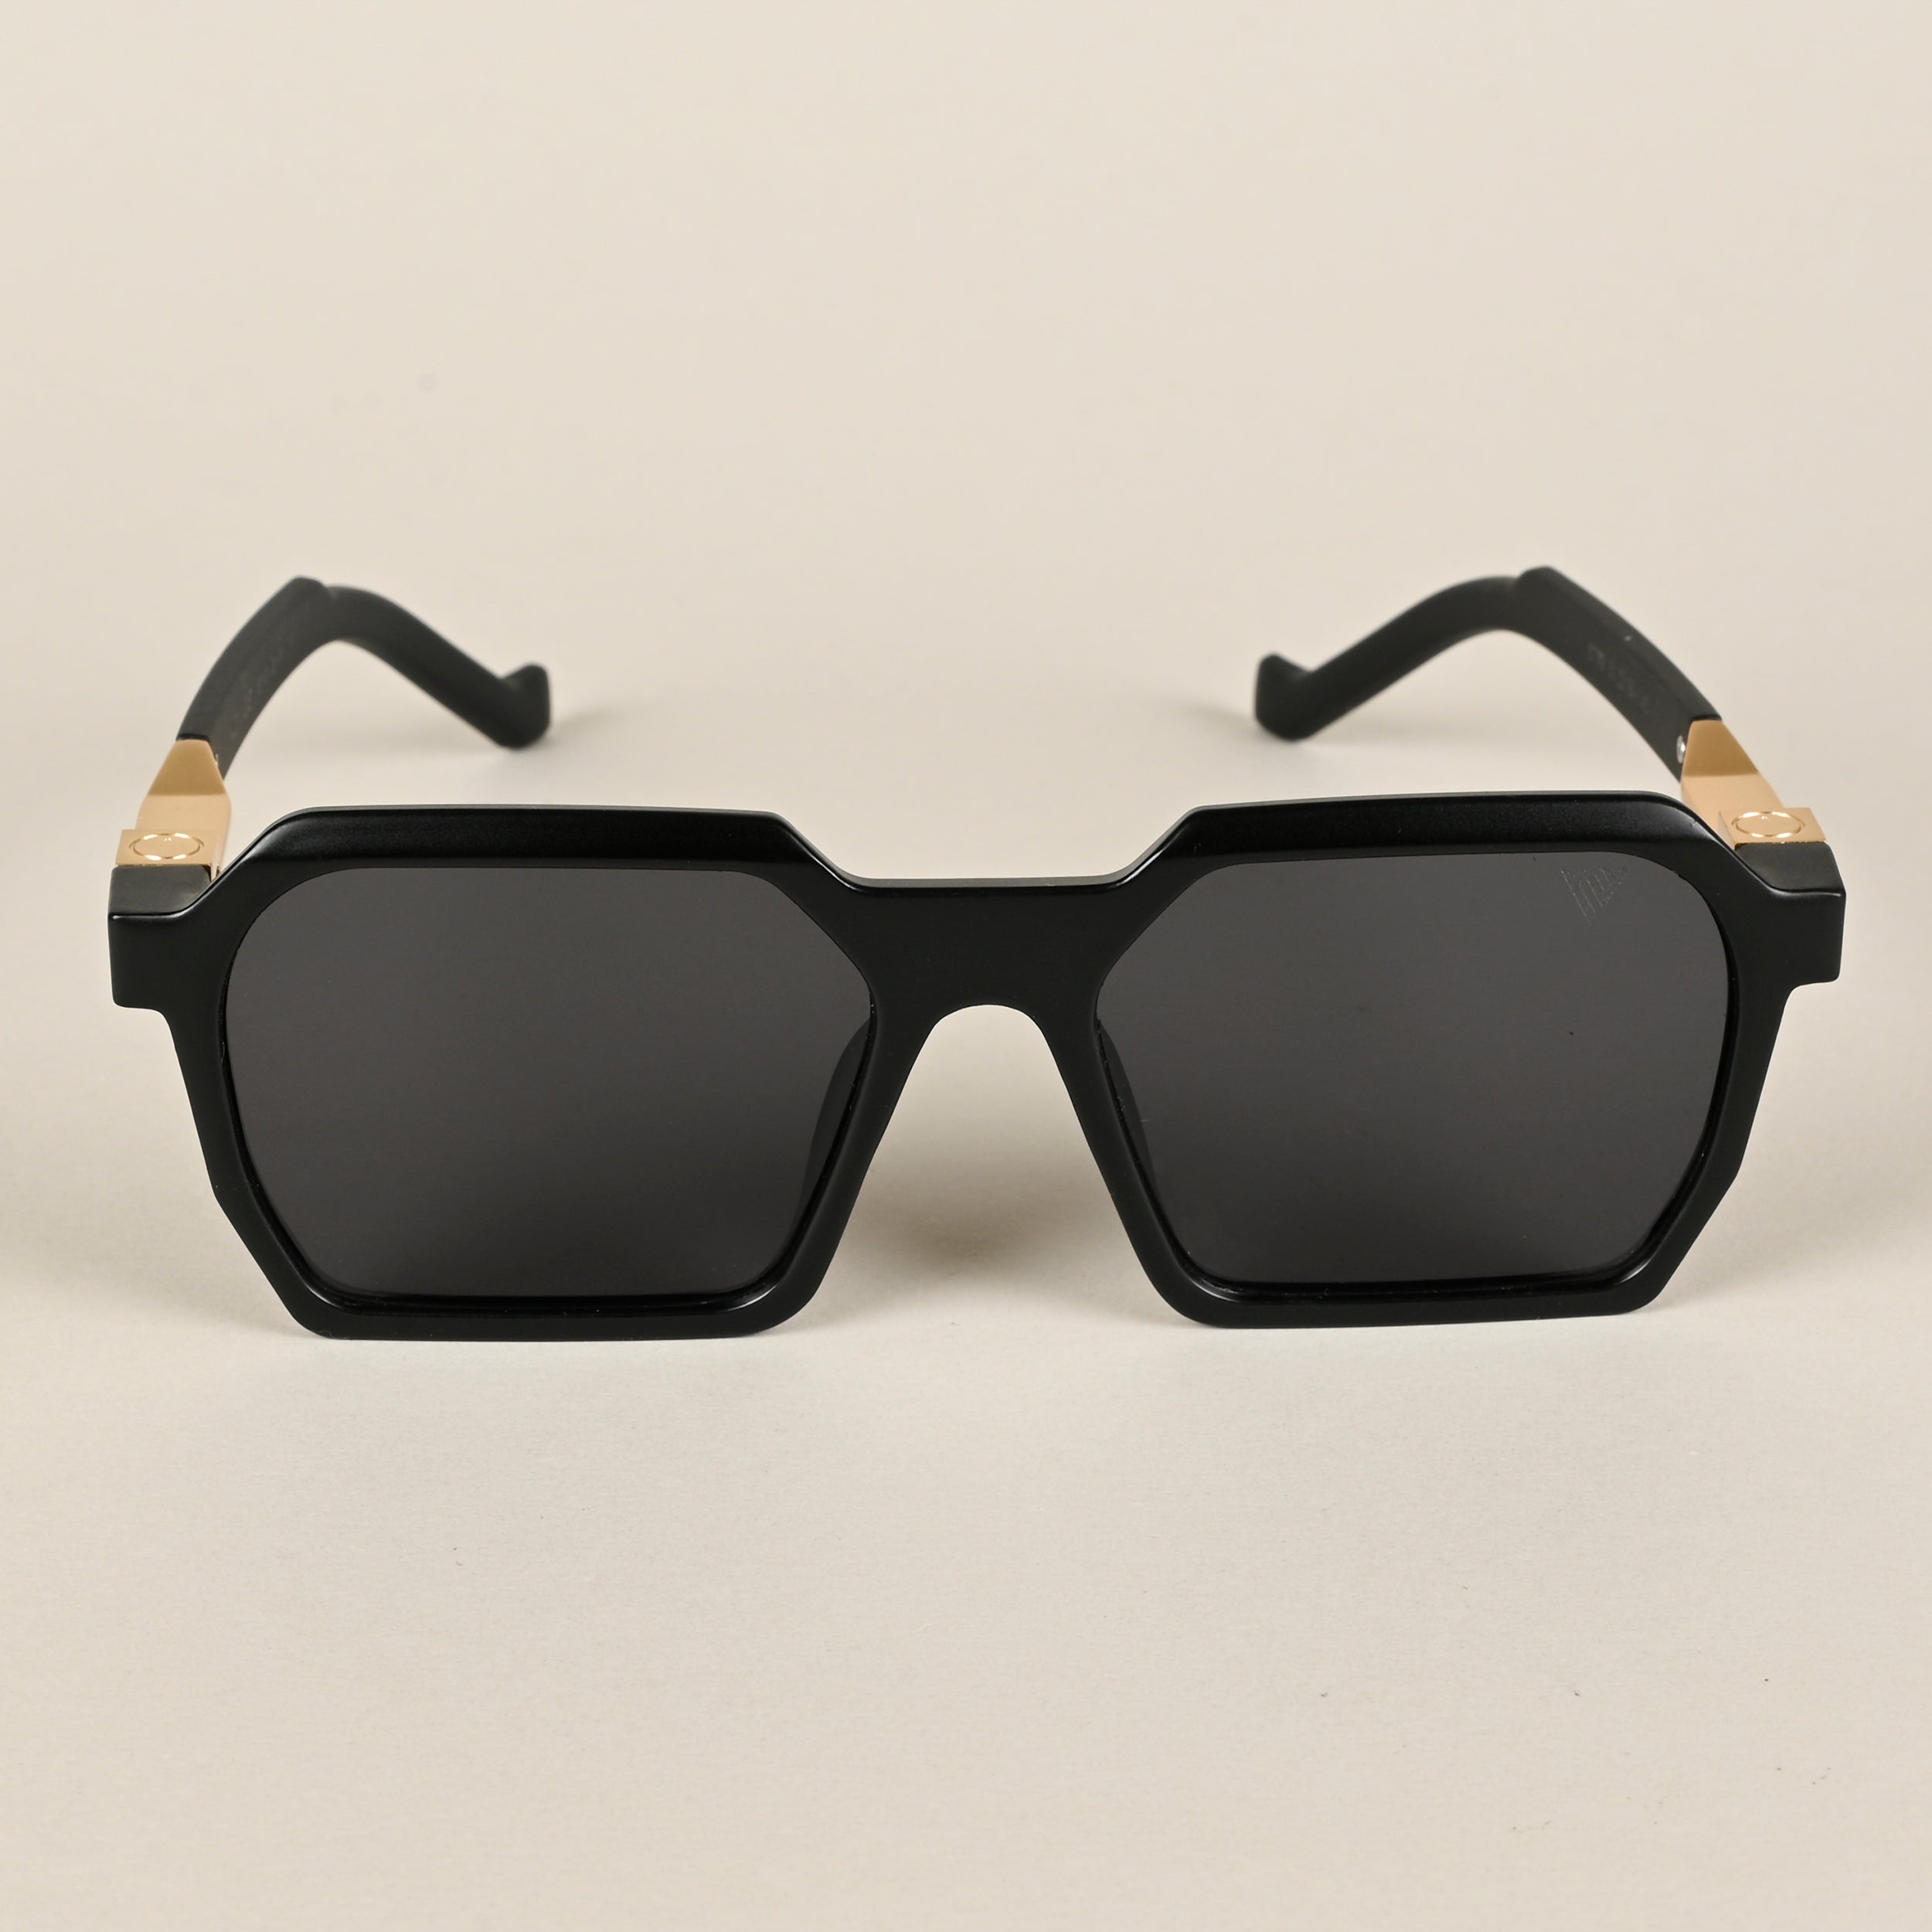 Voyage Black Wayfarer Sunglasses for Men & Women (8779MG4193)